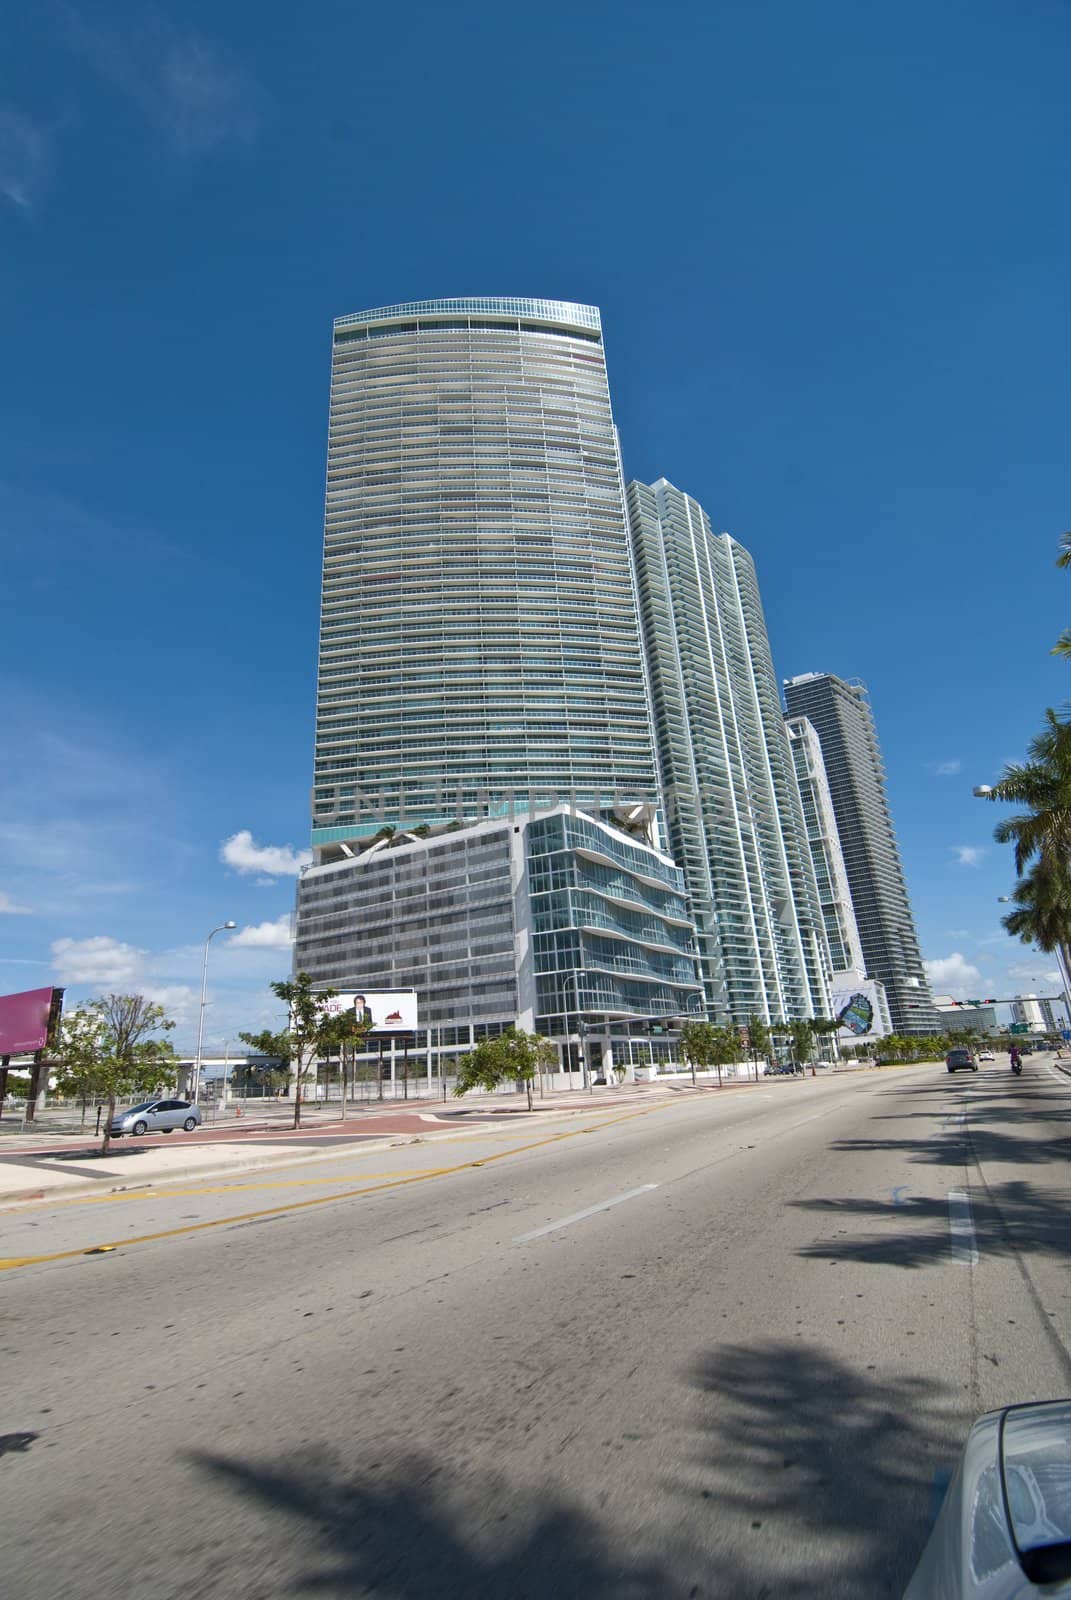 Streets of Miami, Florida by jovannig